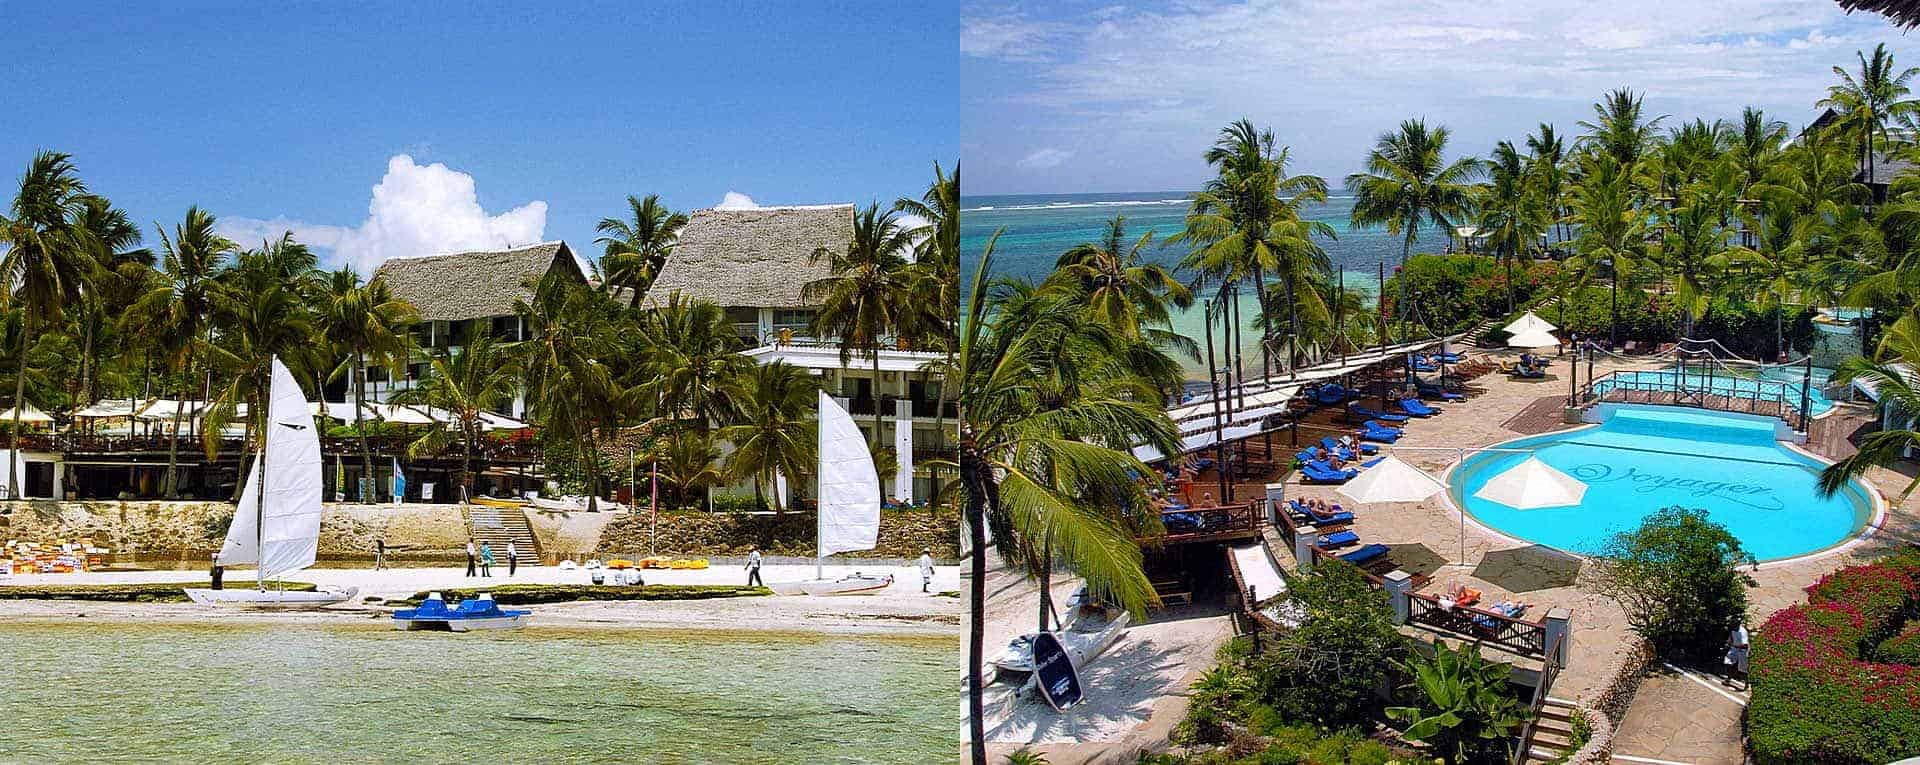 Voyager Beach Resort - Mombasa North Beach Accommodation In Kenya -  AfricanMecca Safaris & Tours